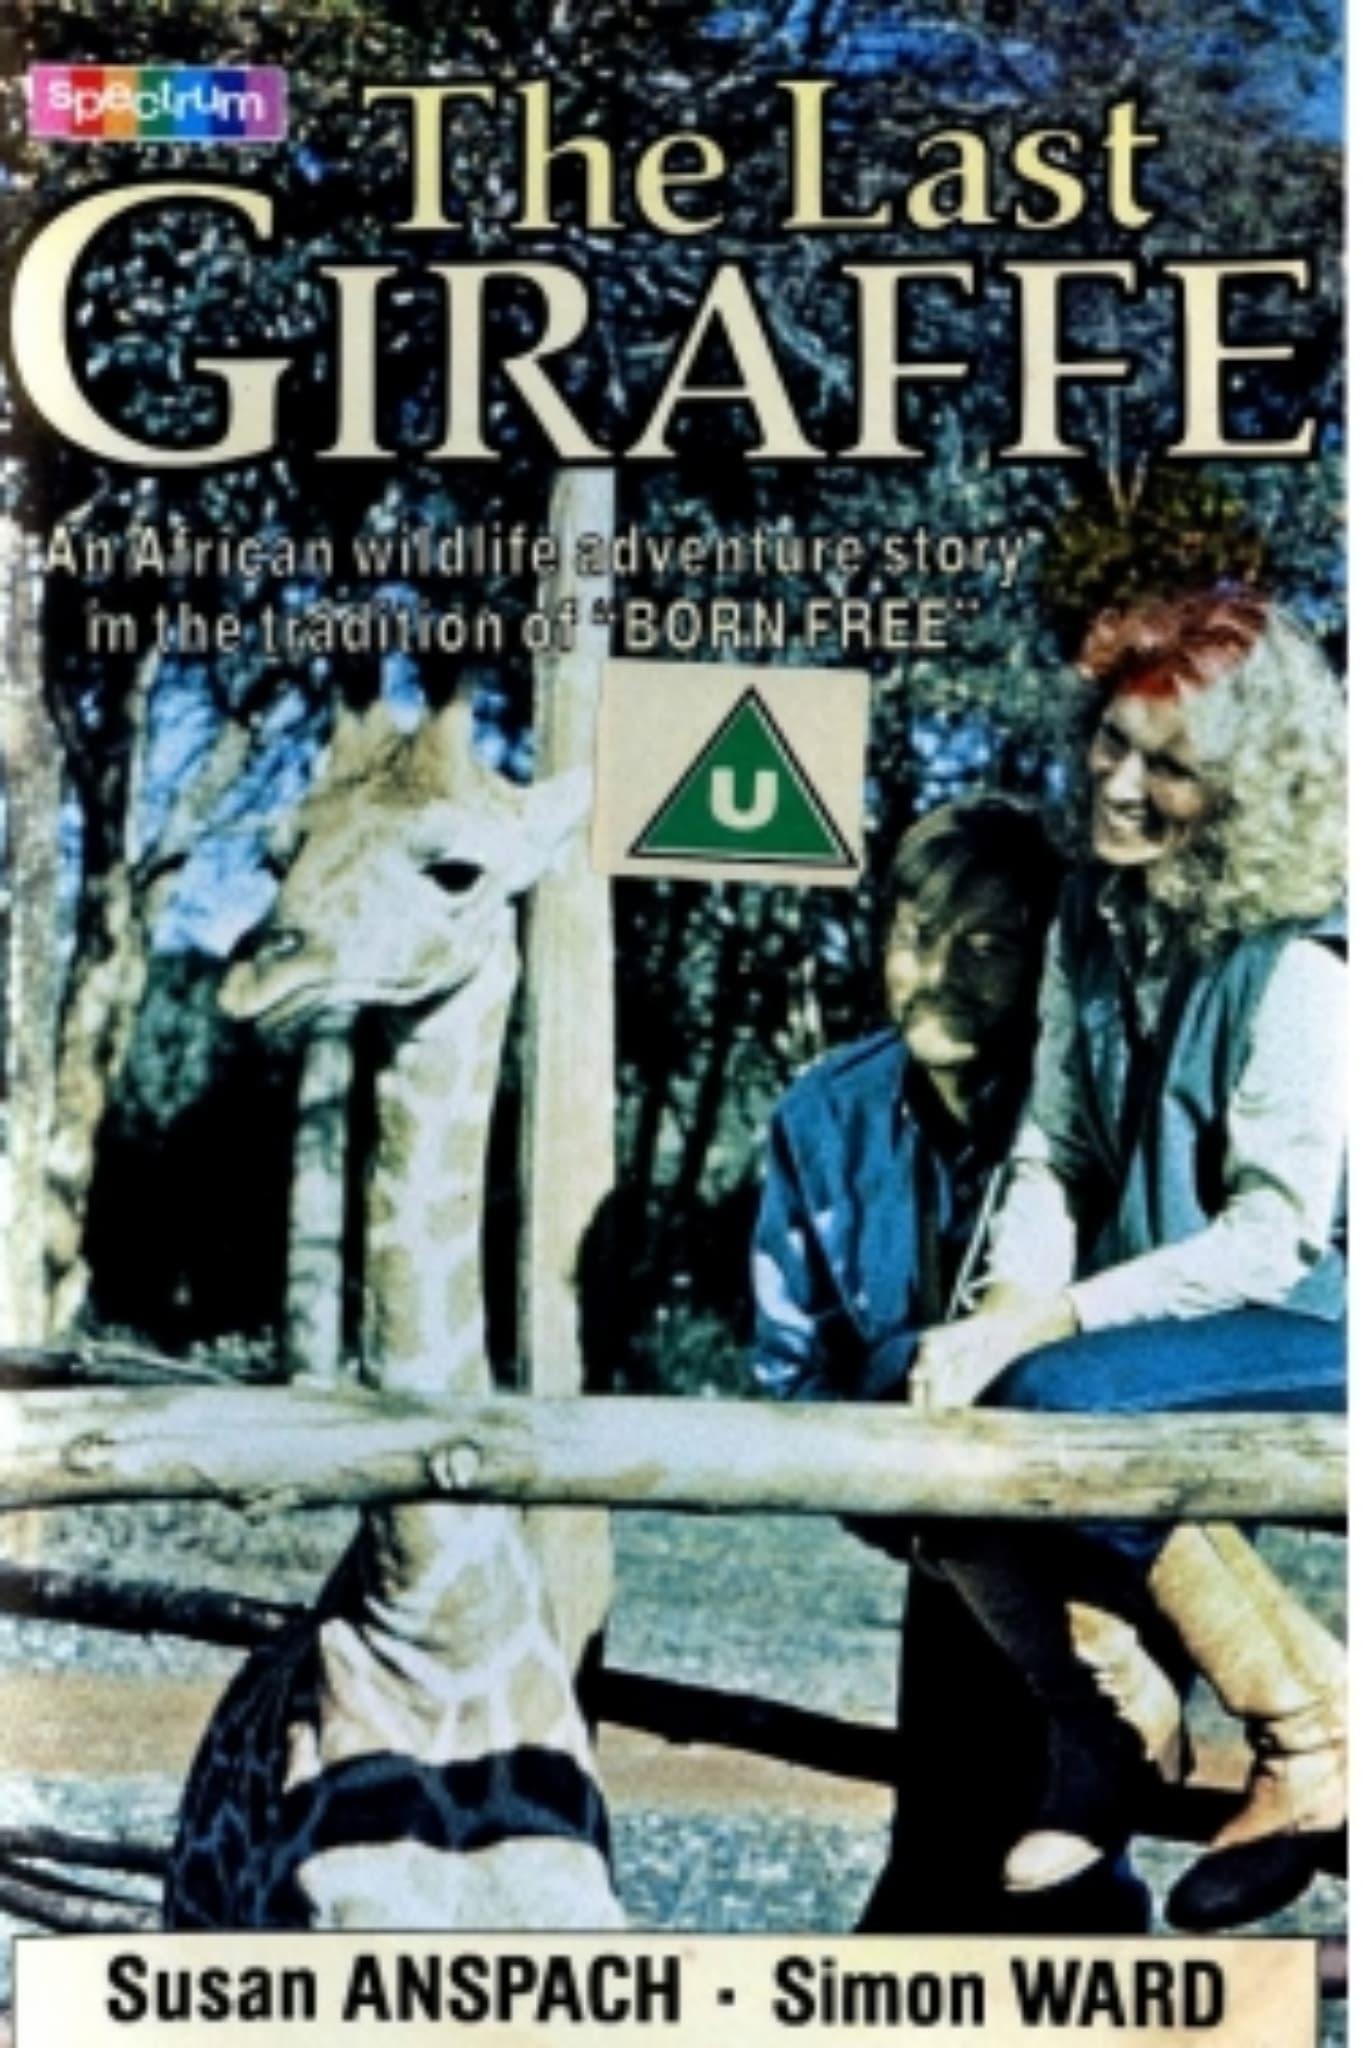 The Last Giraffe poster